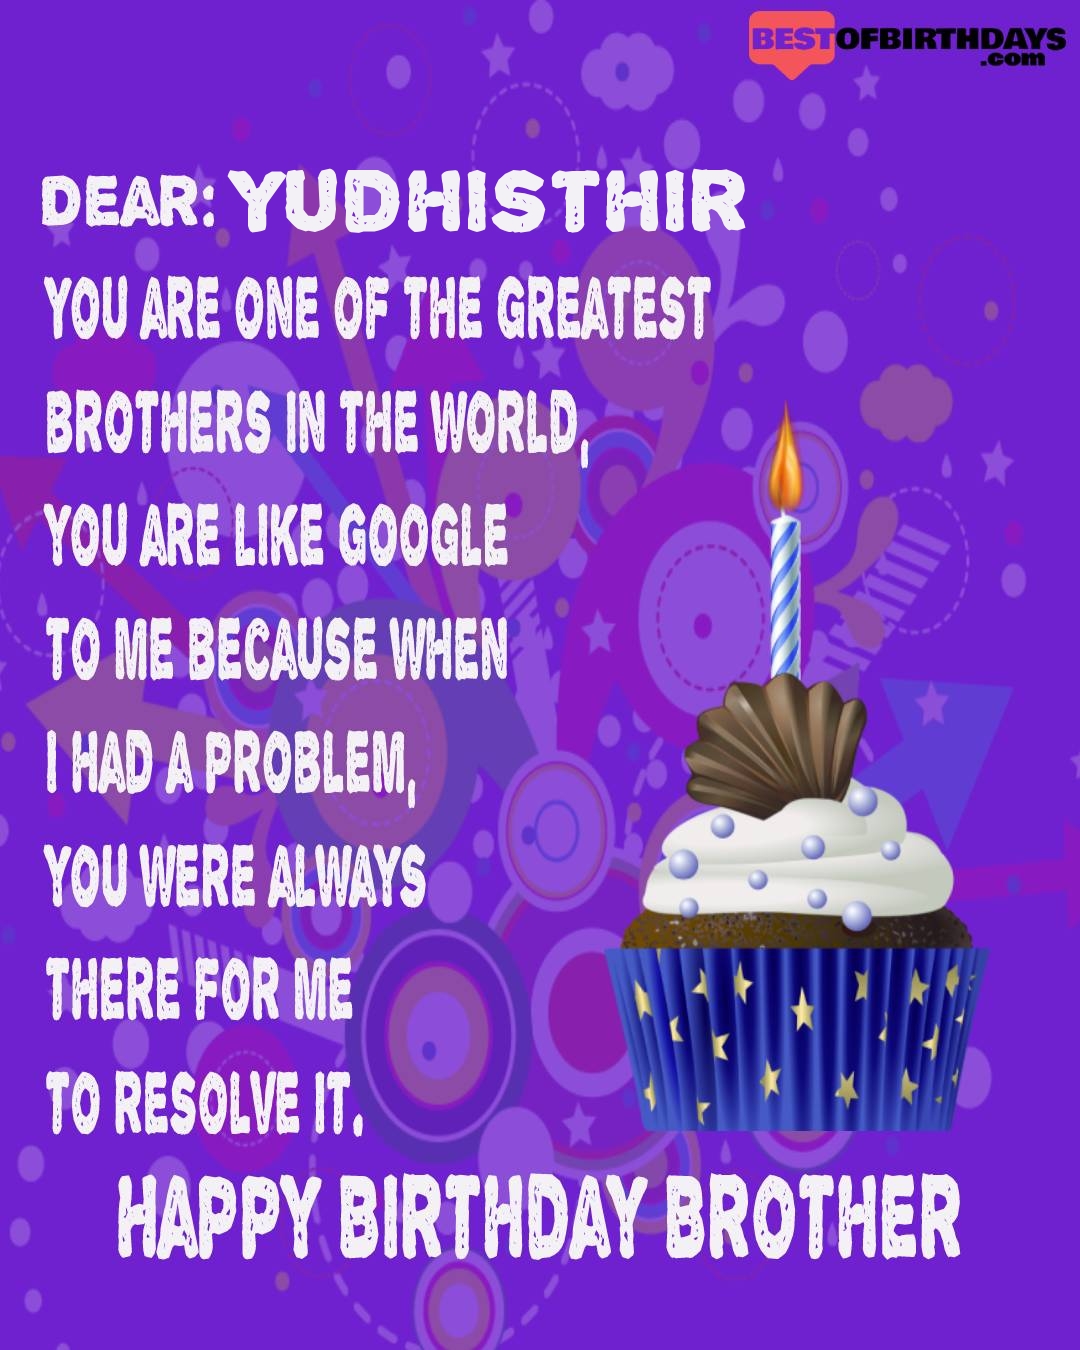 Happy birthday yudhisthir bhai brother bro